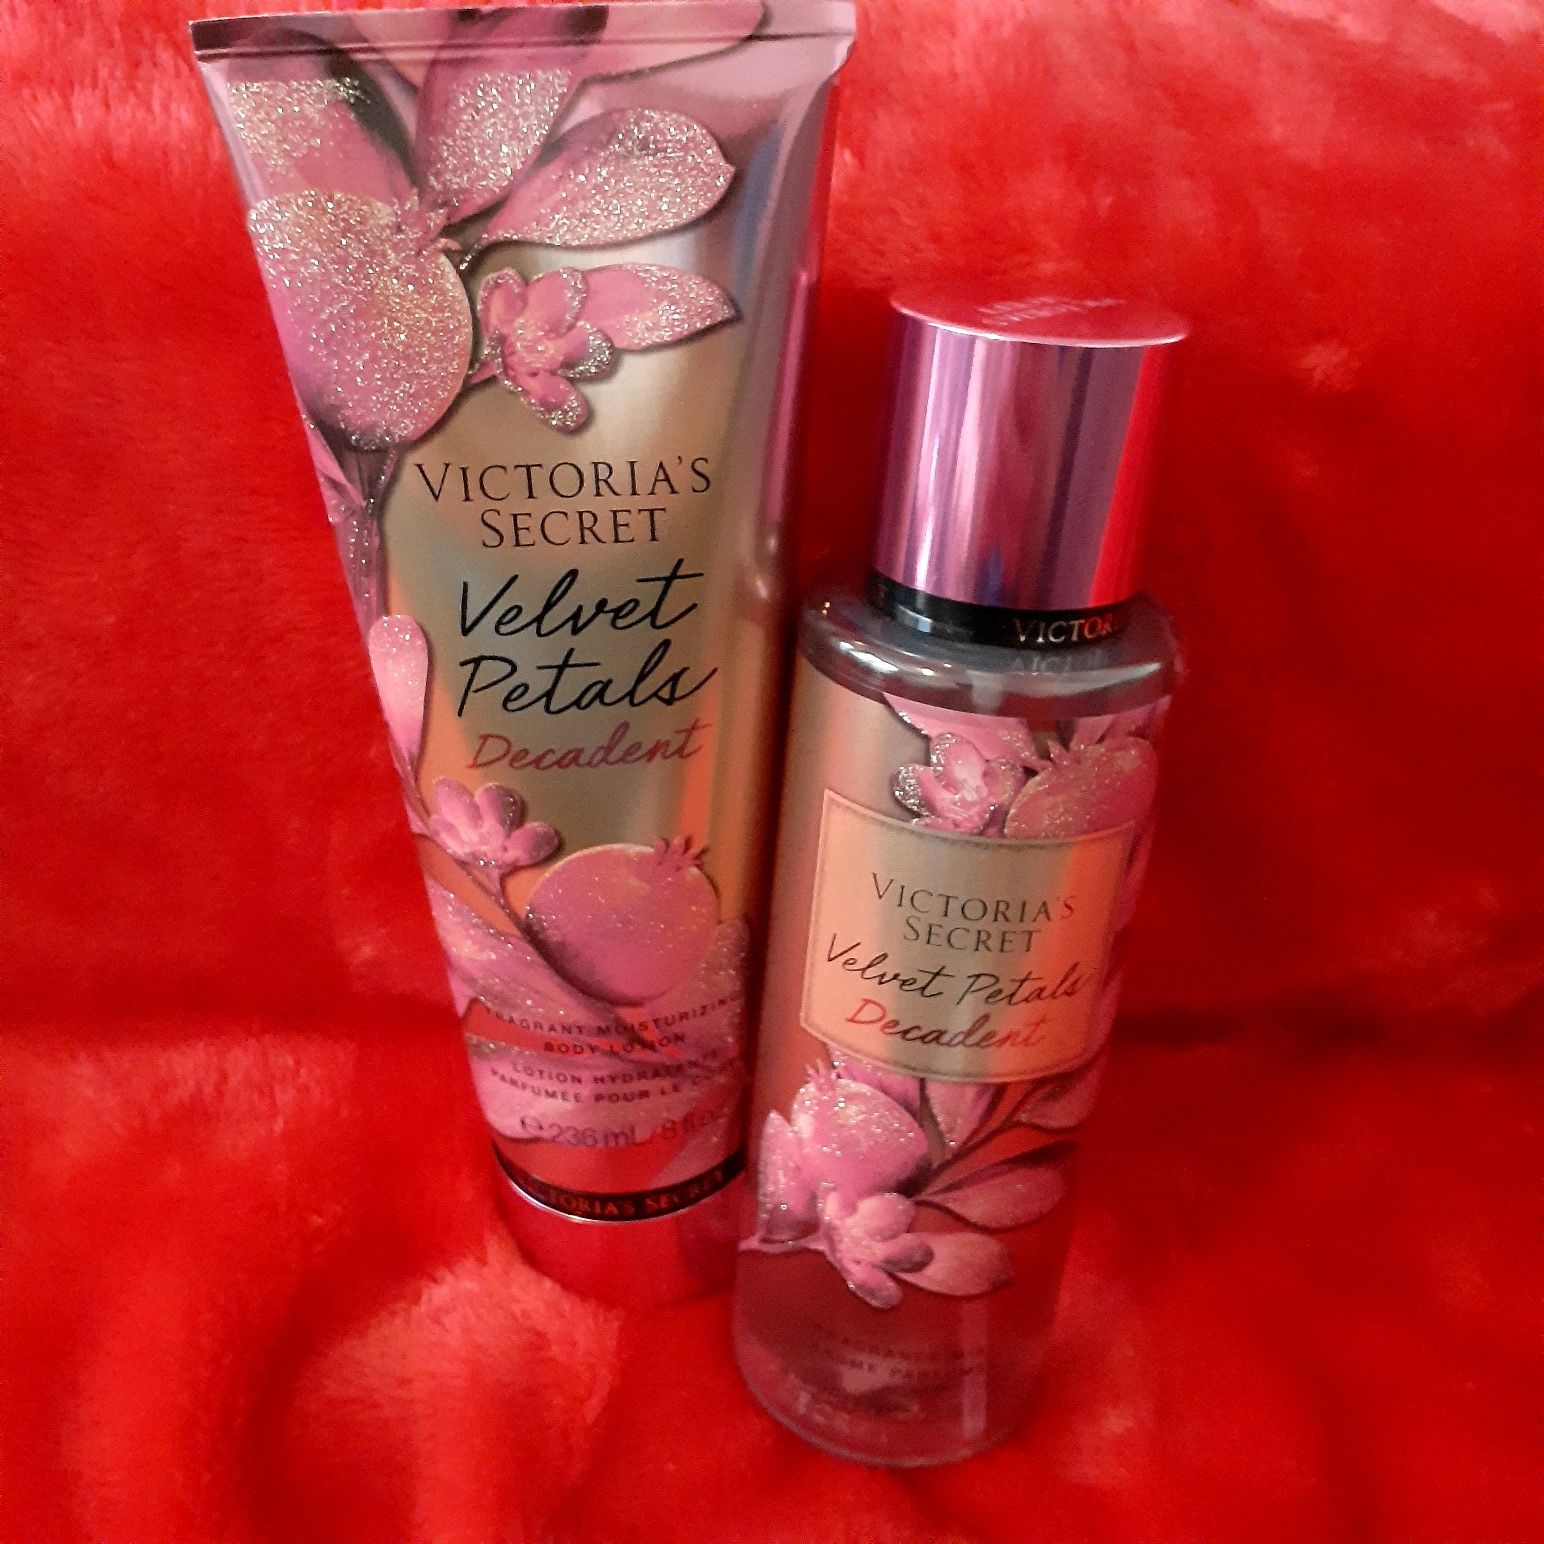 Perfume and lotion set